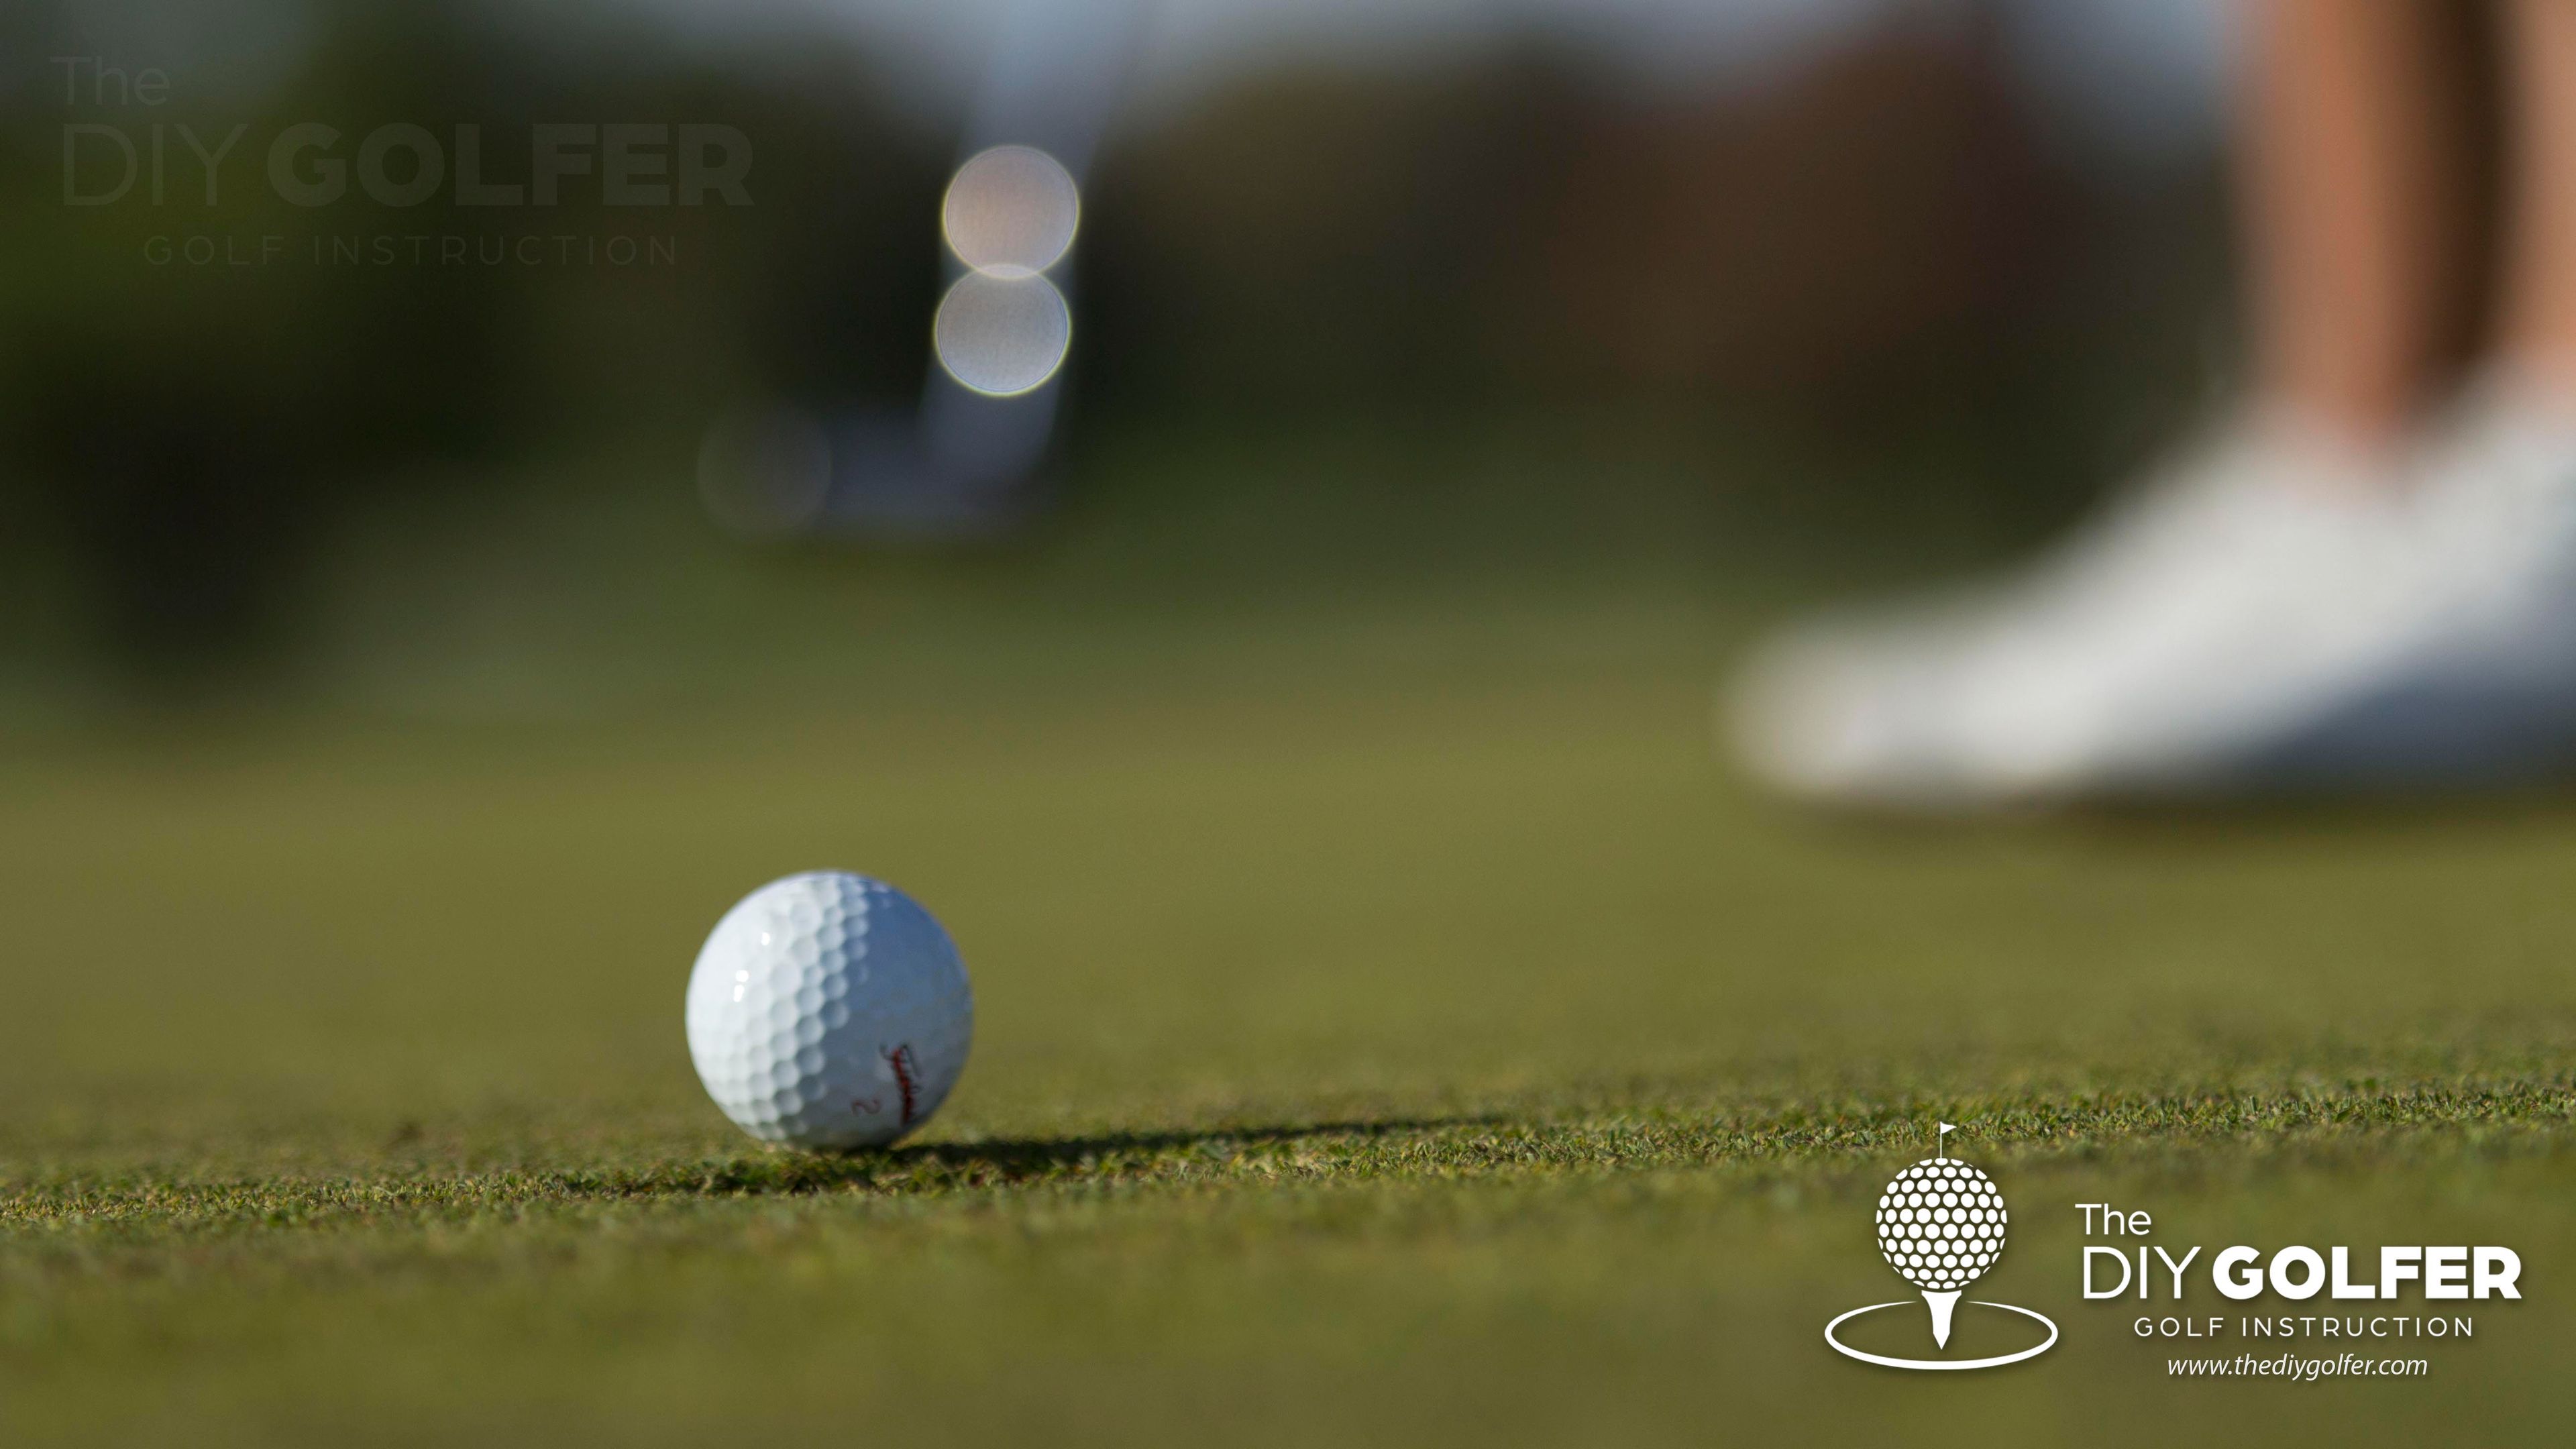 High Definition Golf Putting Photo: Making a Putt